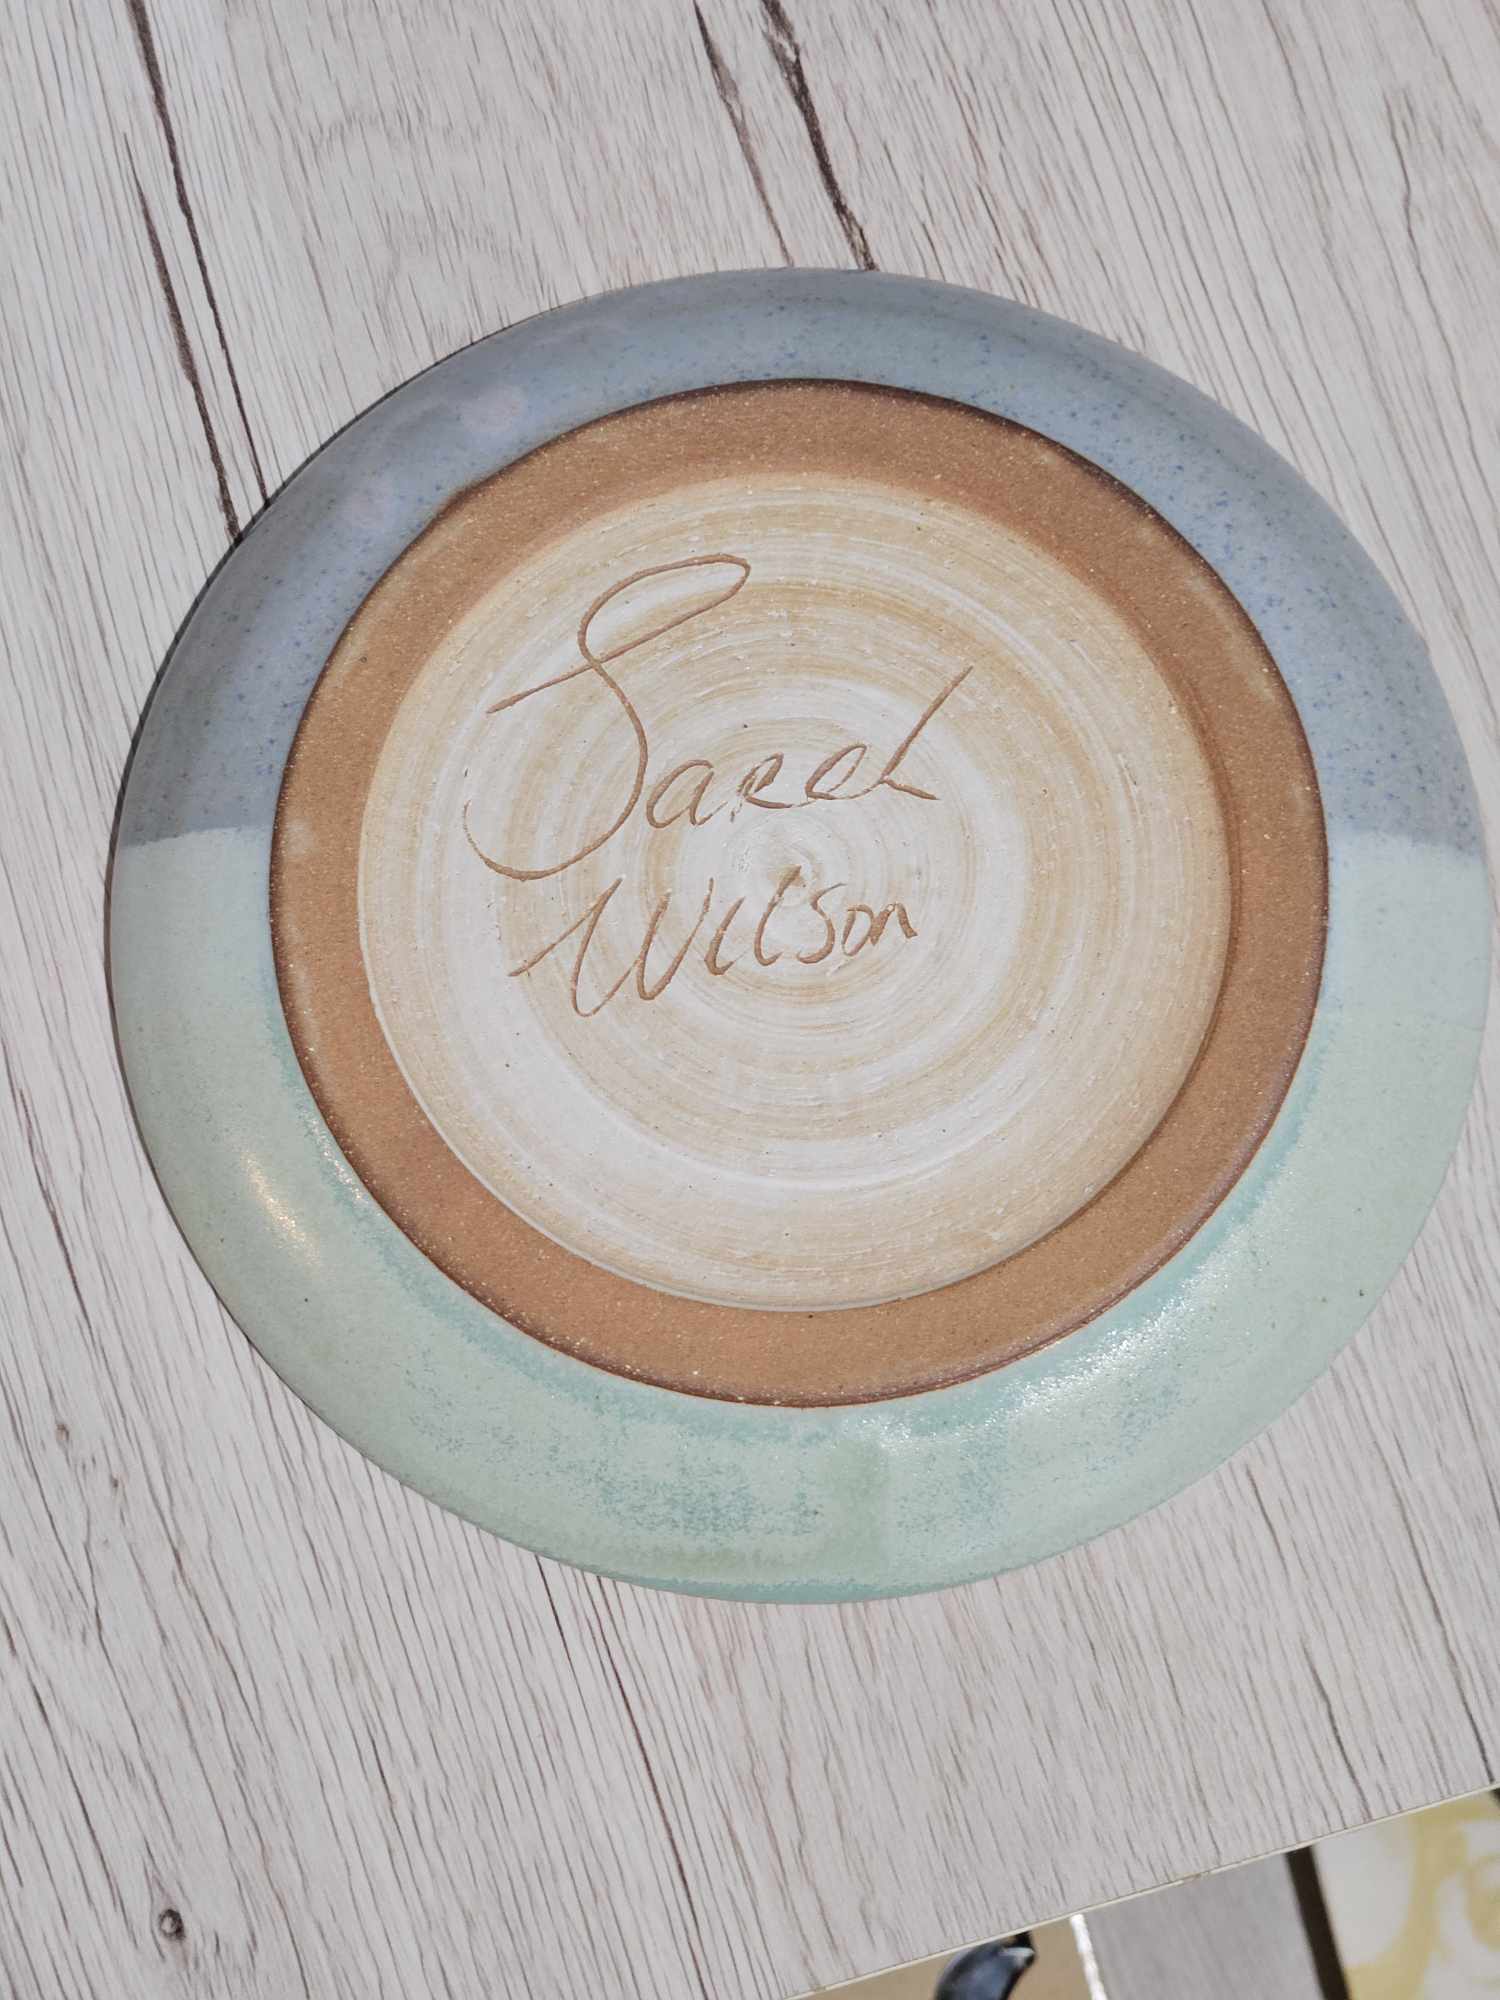 sarah wilson butter dish pottery nanaimo